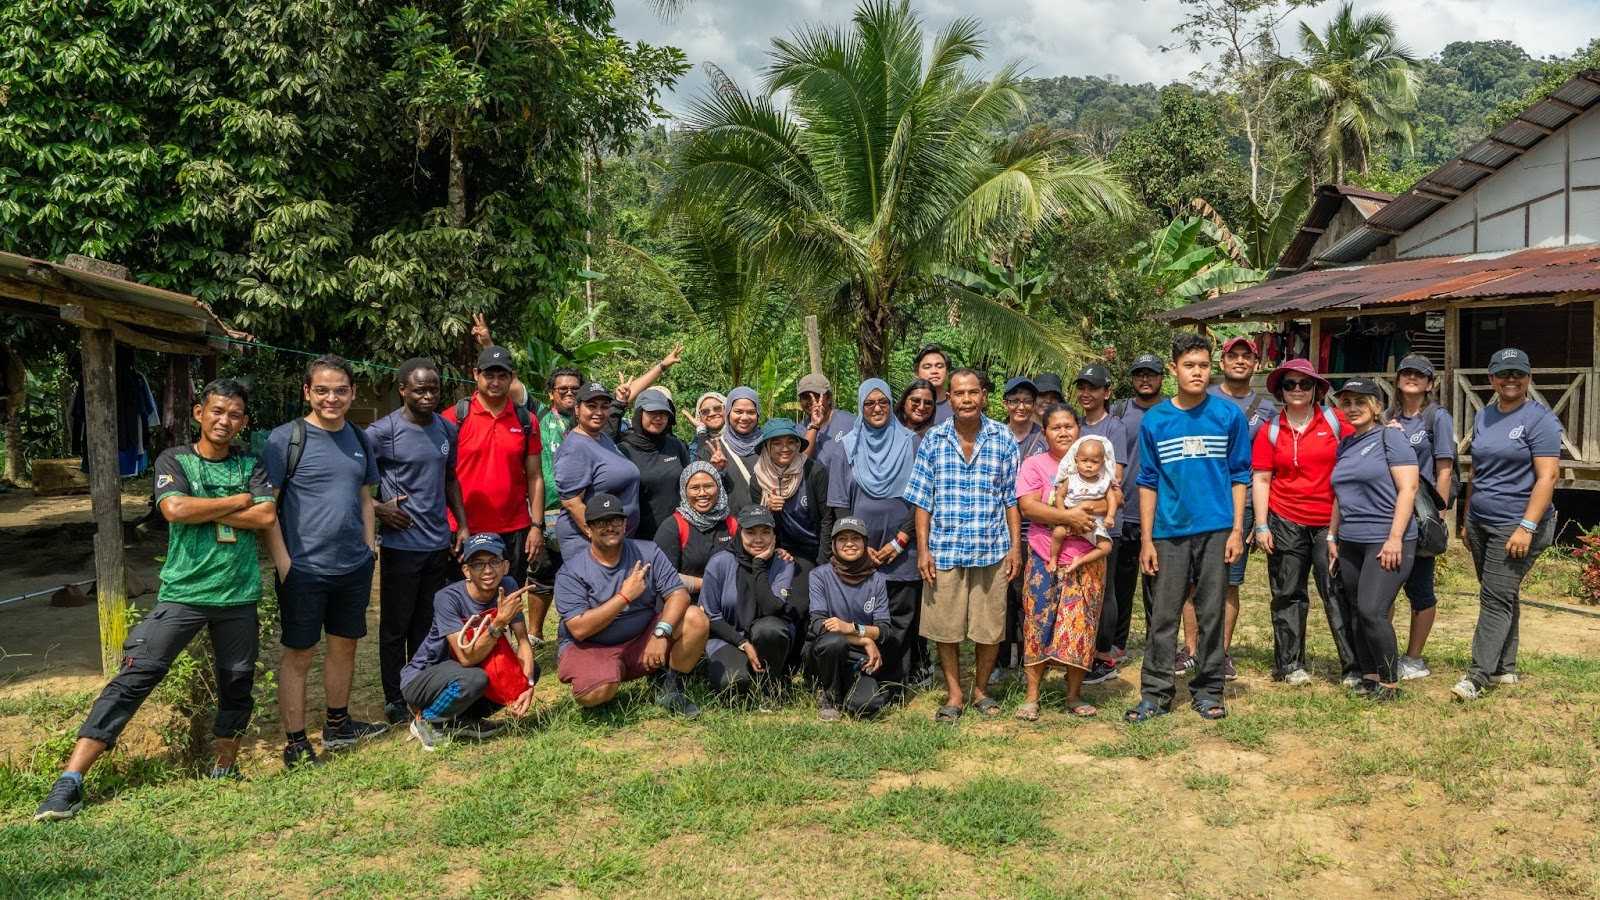  An image of Deriv employees in the Orang Asli village